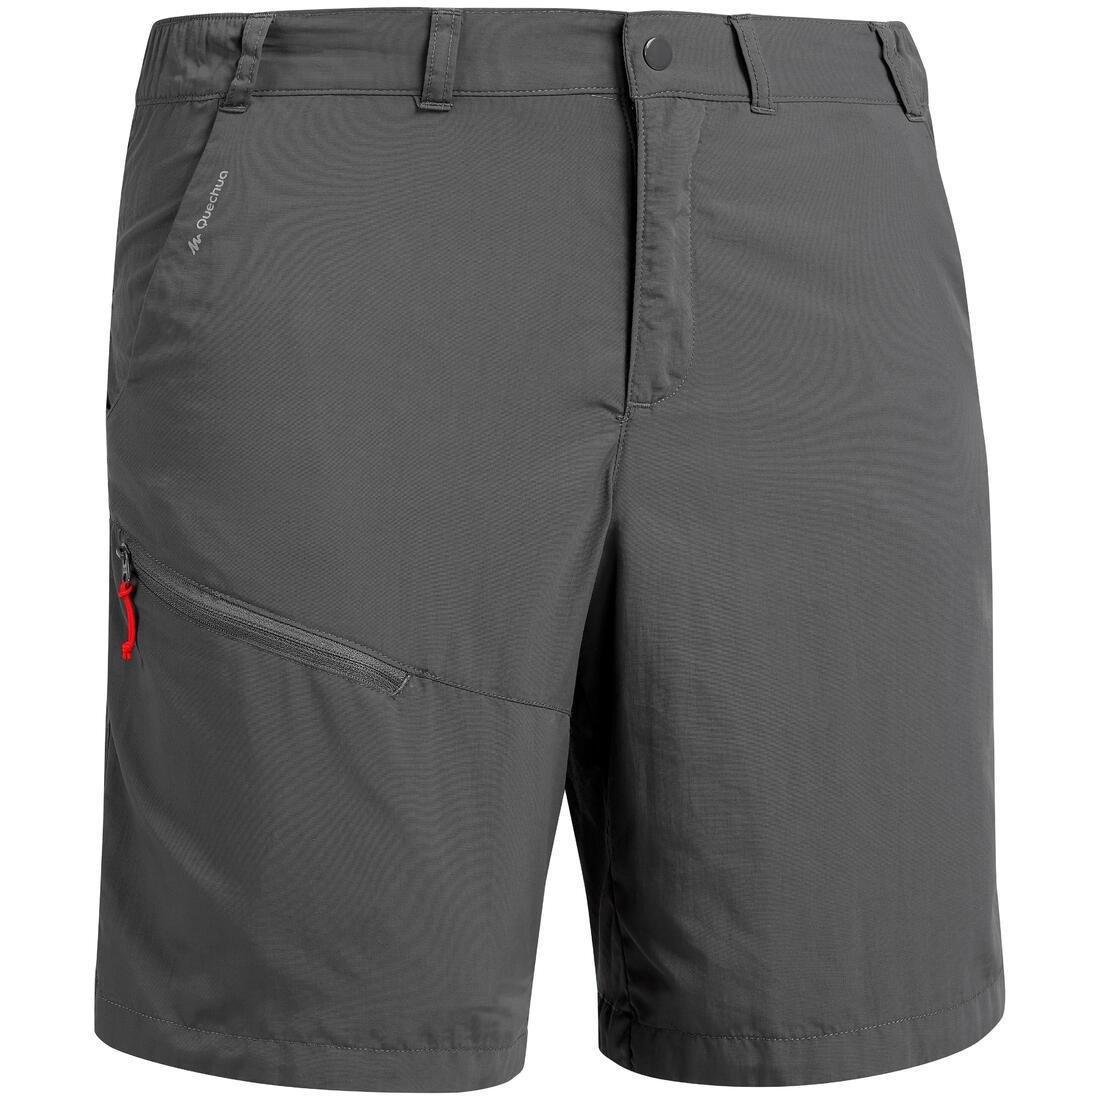 QUECHUA - 5Mens Walking Shorts, Charcoal Grey